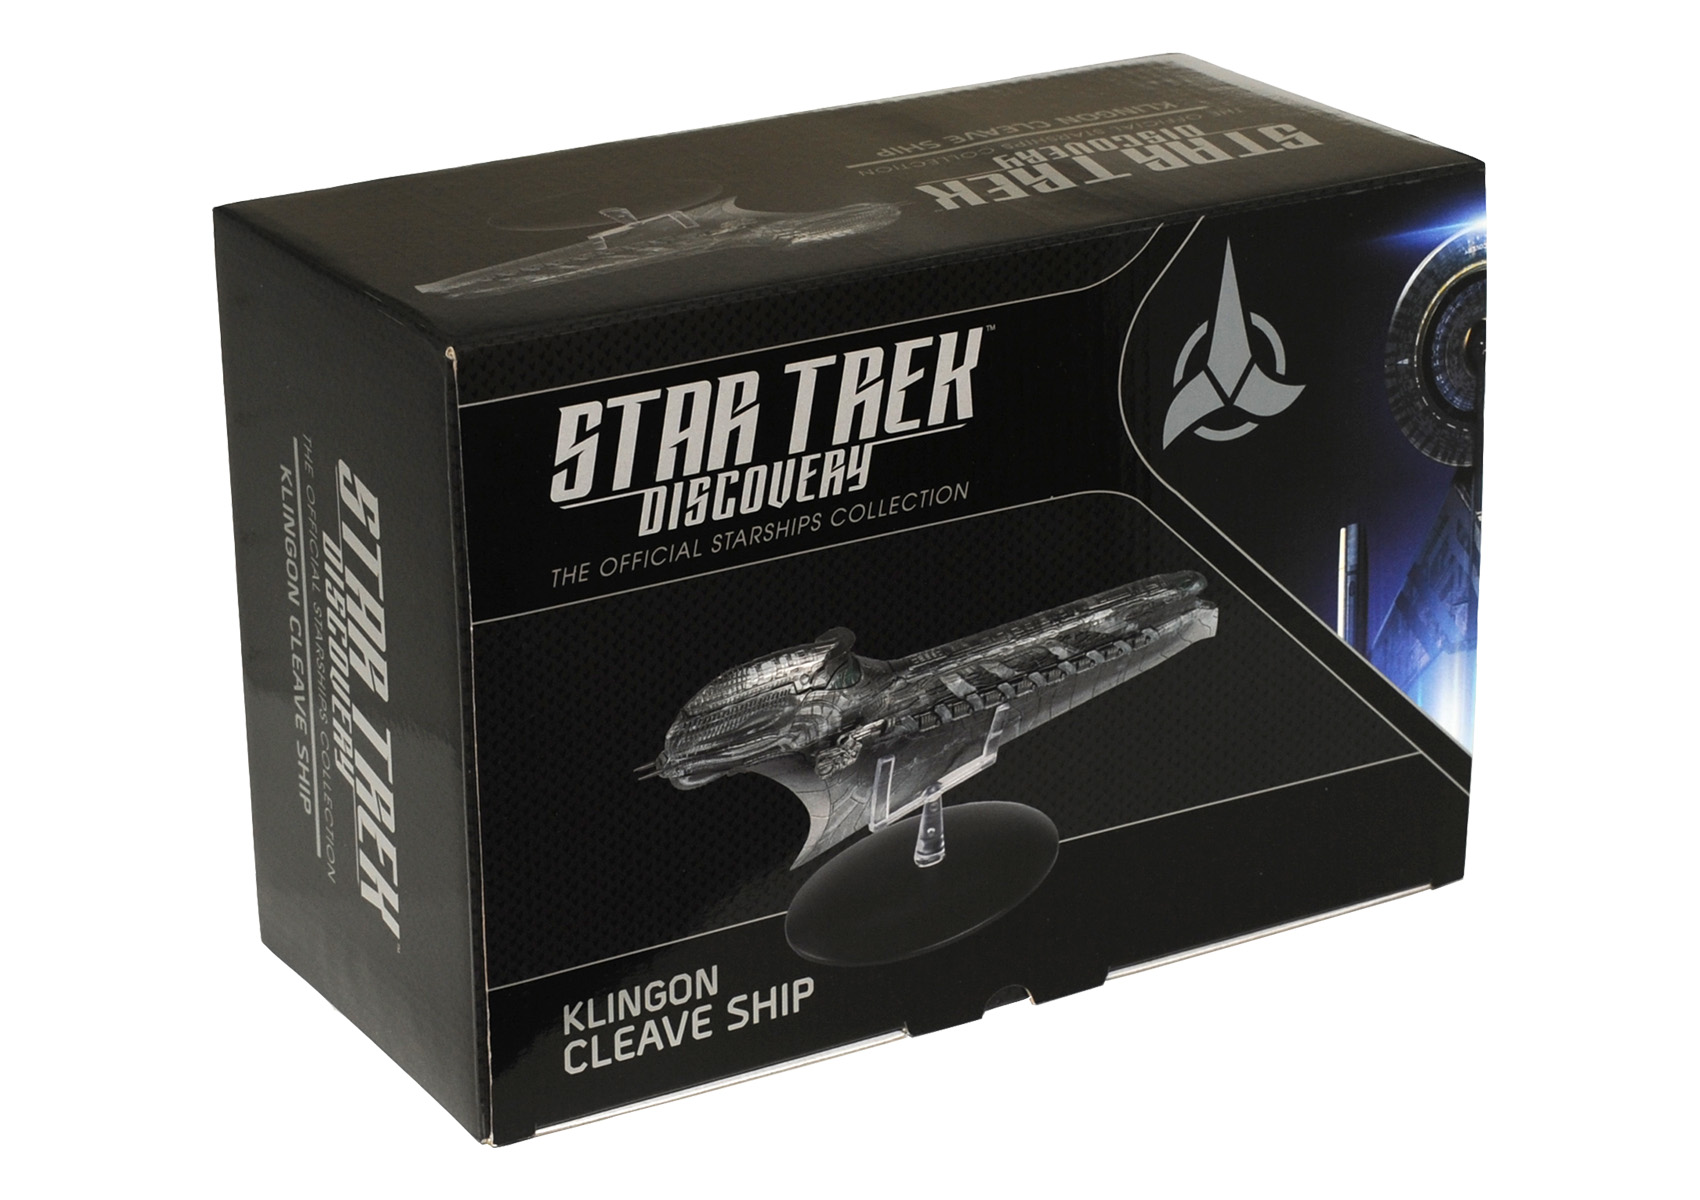 Eaglemoss Star Trek Starships Discovery Issue 14 Box